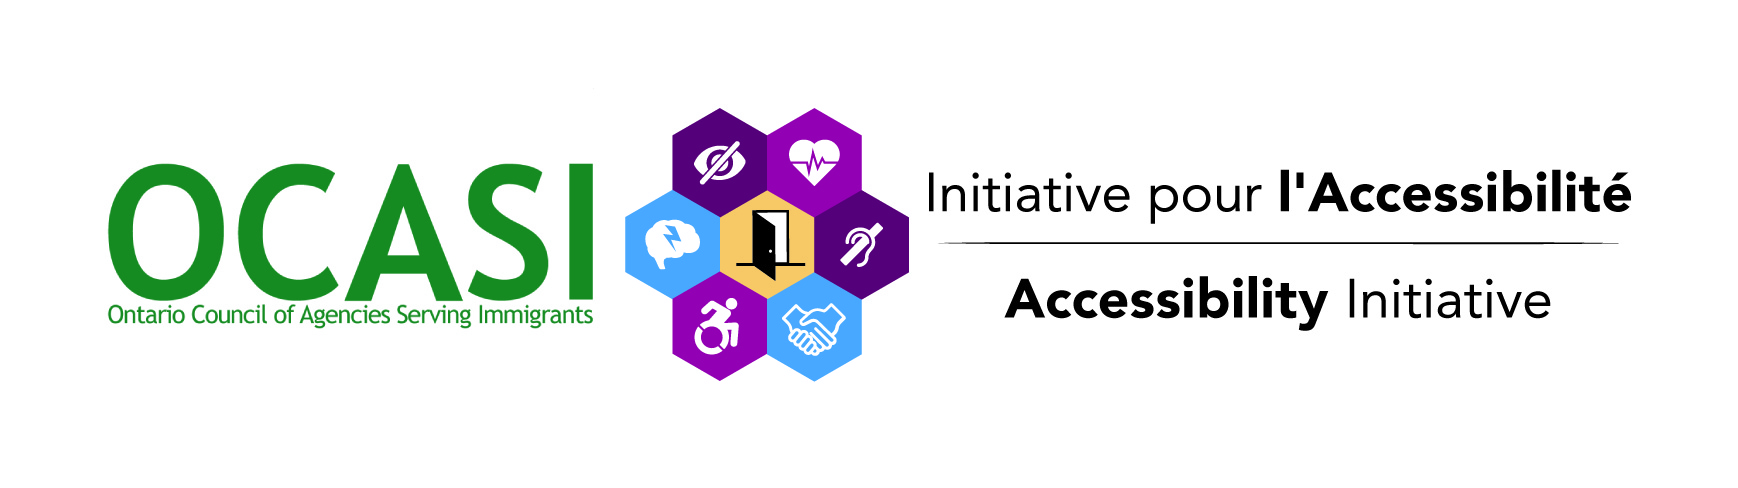 OCASI Accessibility Initiative logo